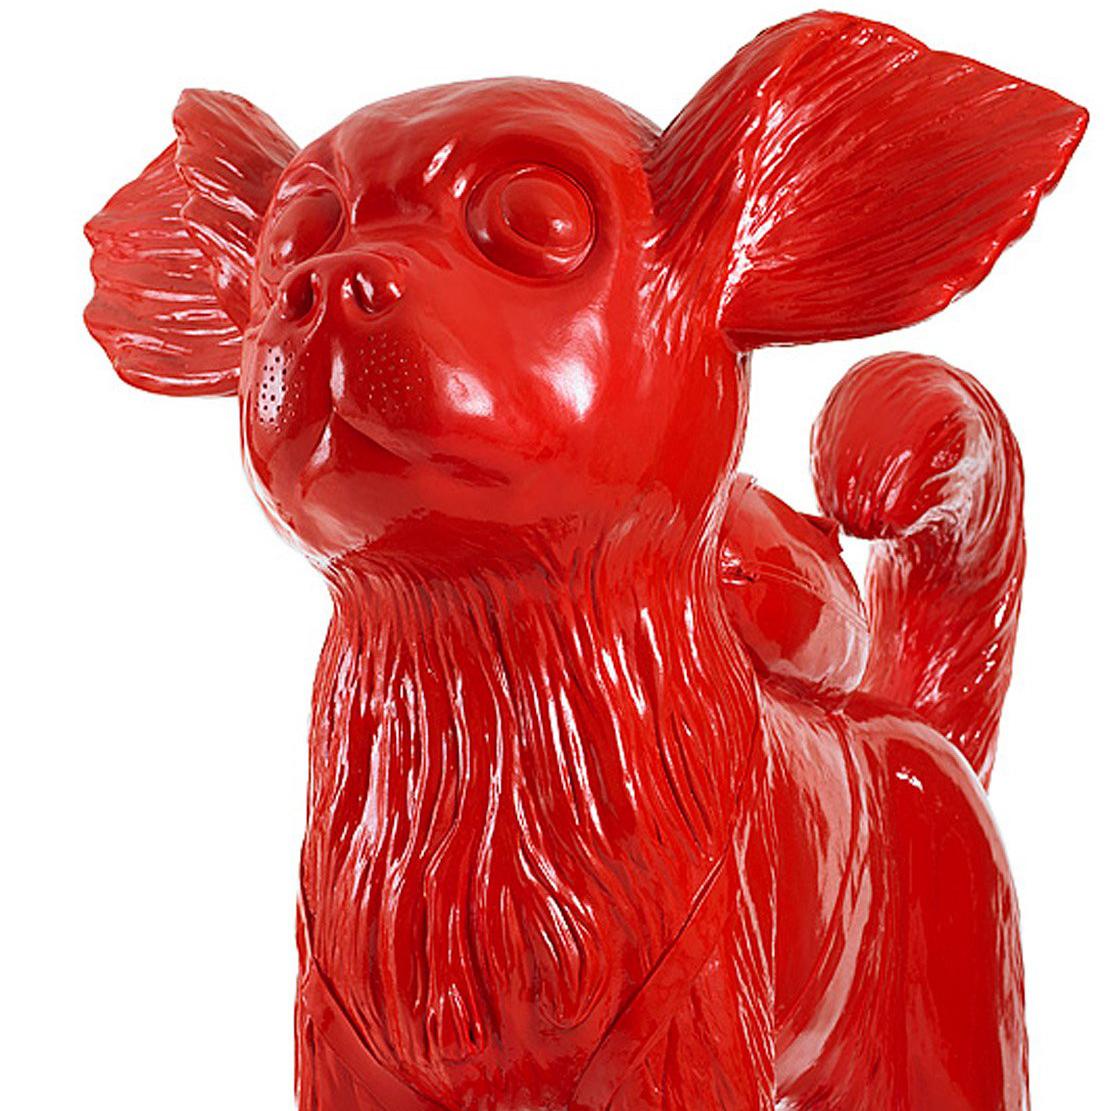 Geklonter Chihuahua  (Rot), Figurative Sculpture, von William Sweetlove